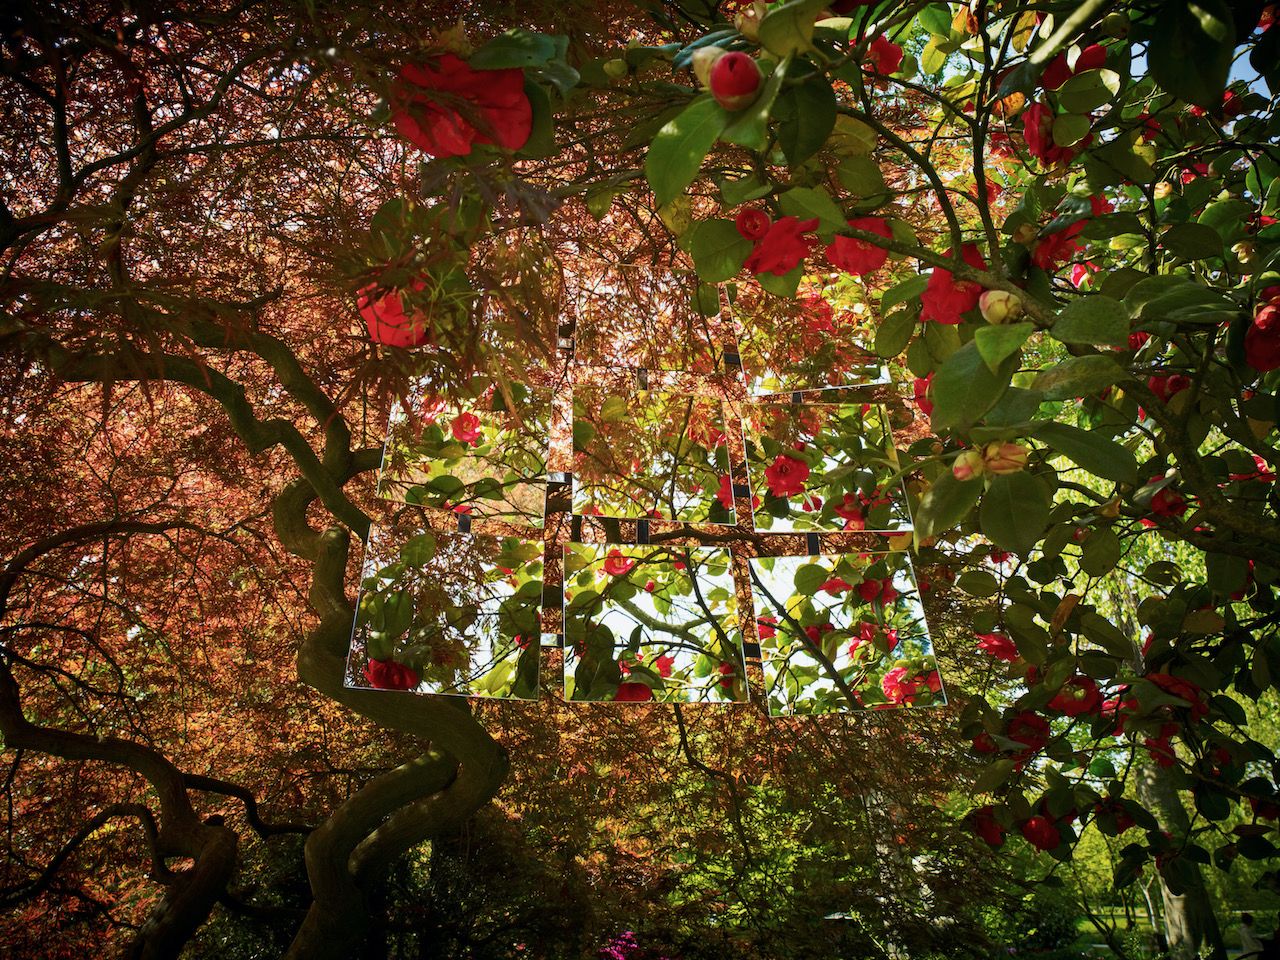 Michael Haegele 自然摄影 内景 树顶上有红色和粉色的花朵和九个排列的镜子